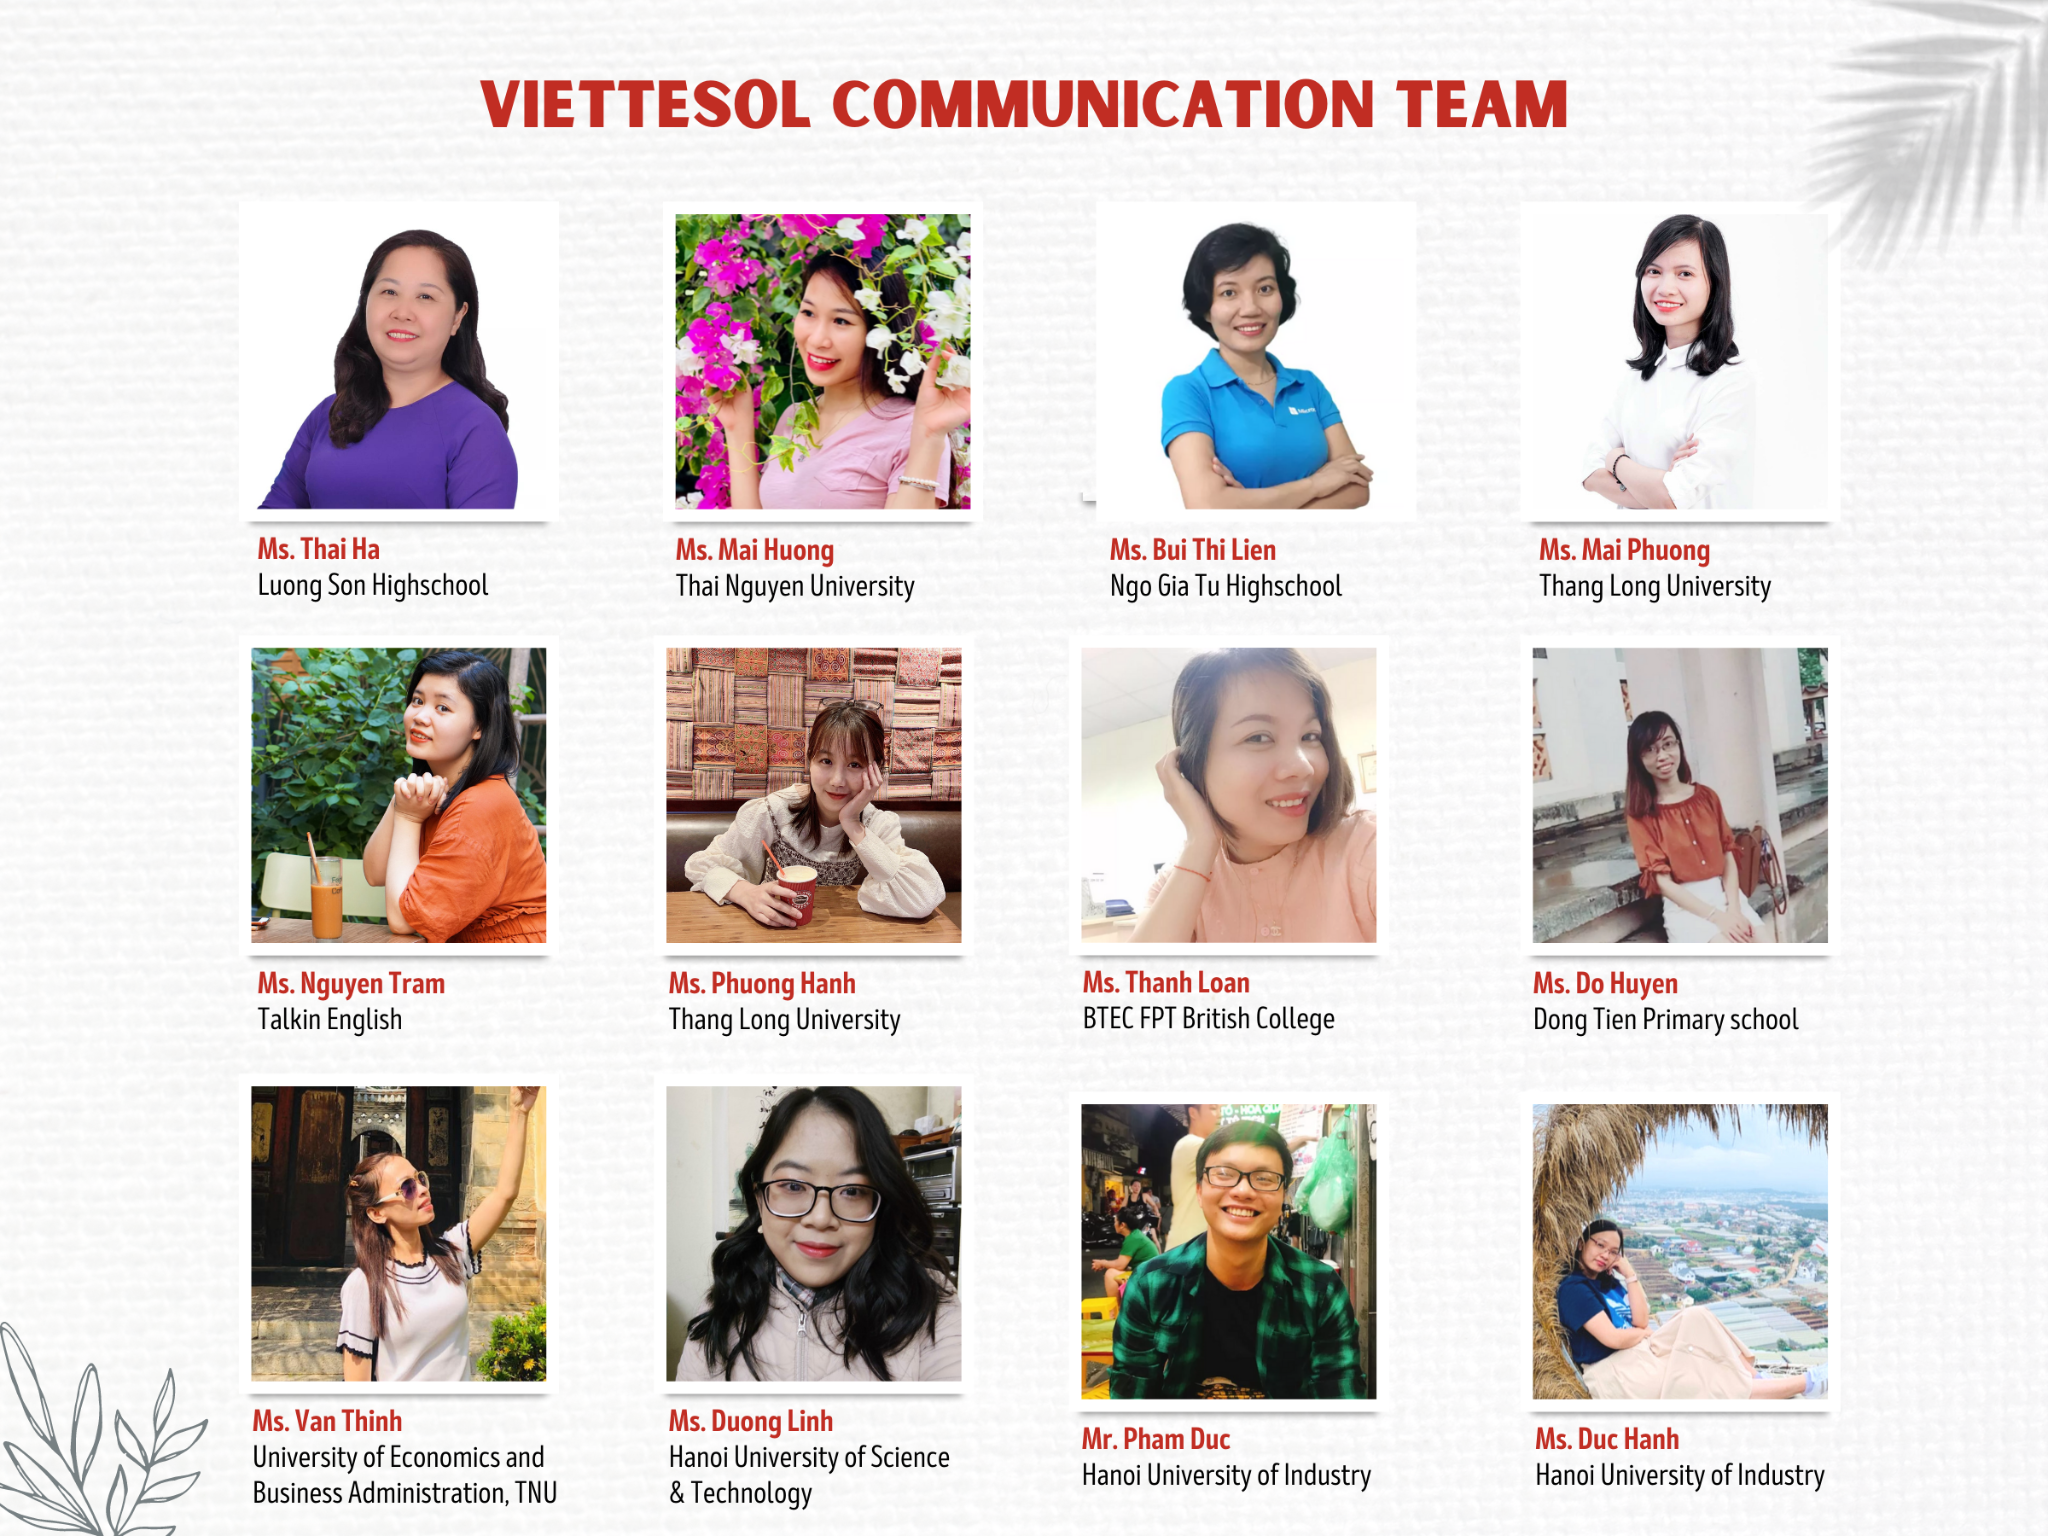 Communication team